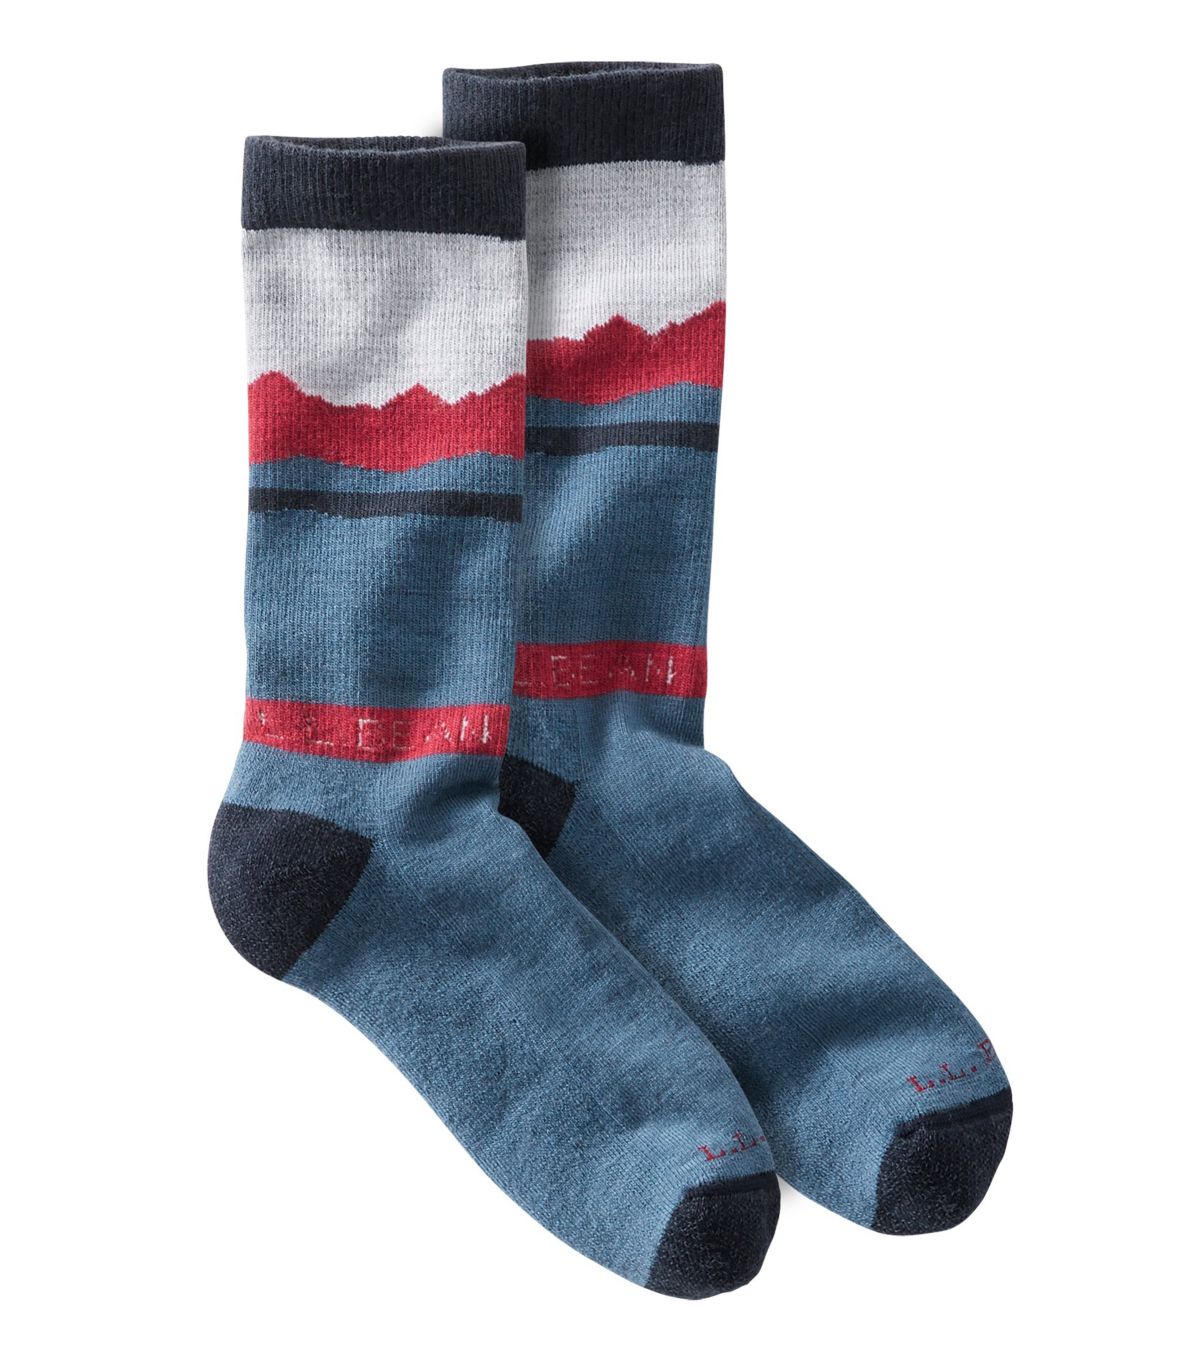 Men's L.L.Bean Campside Wool Socks